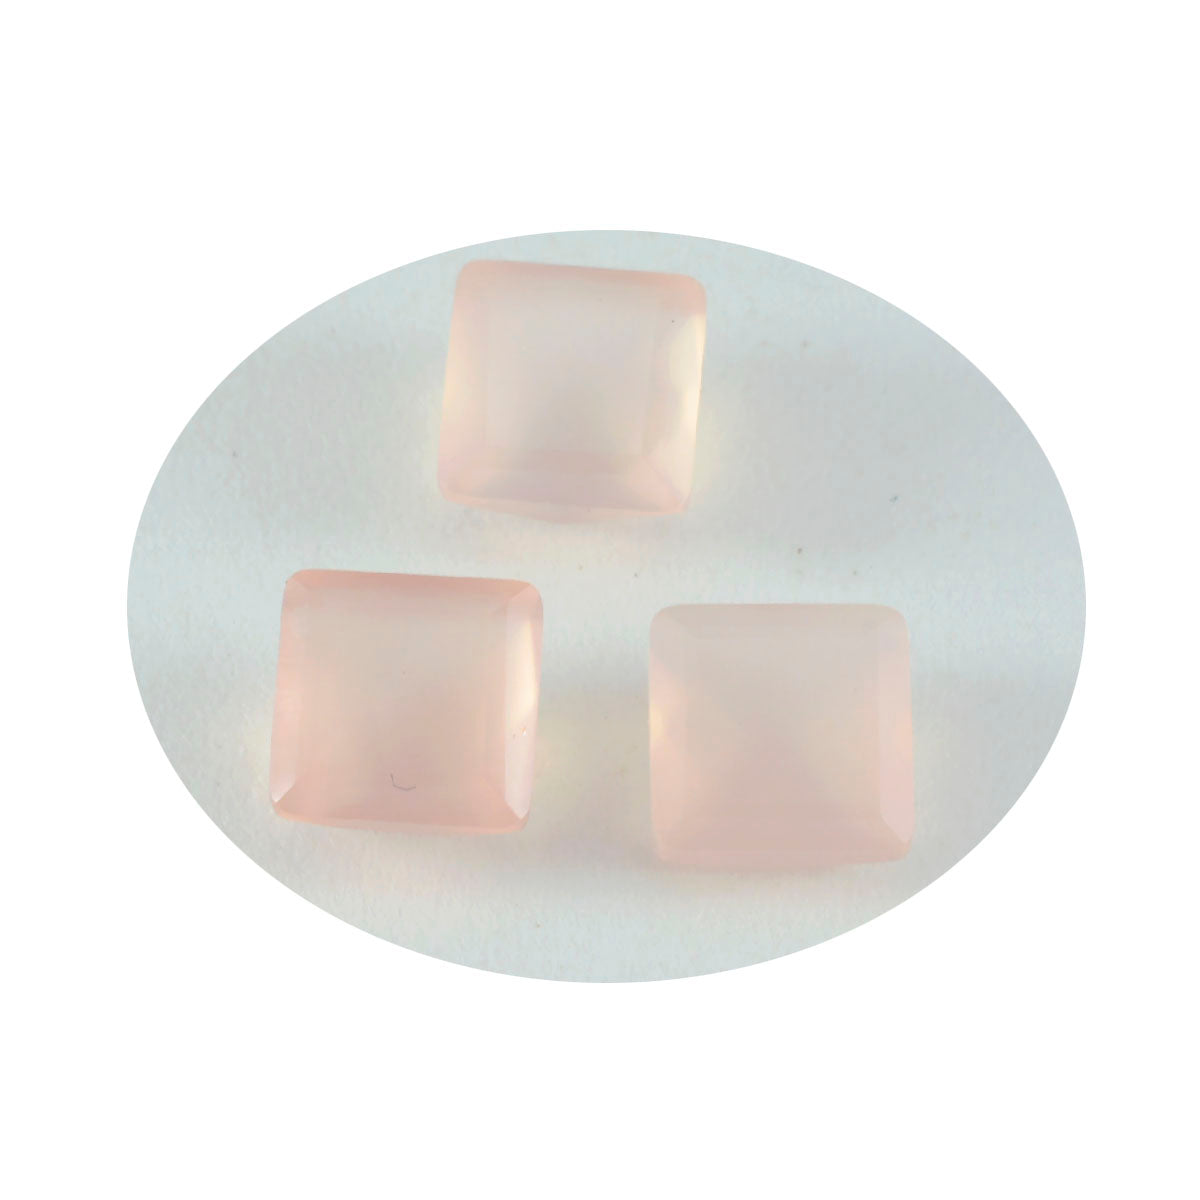 Riyogems 1PC roze rozenkwarts gefacetteerd 14x14 mm vierkante vorm geweldige kwaliteit edelsteen